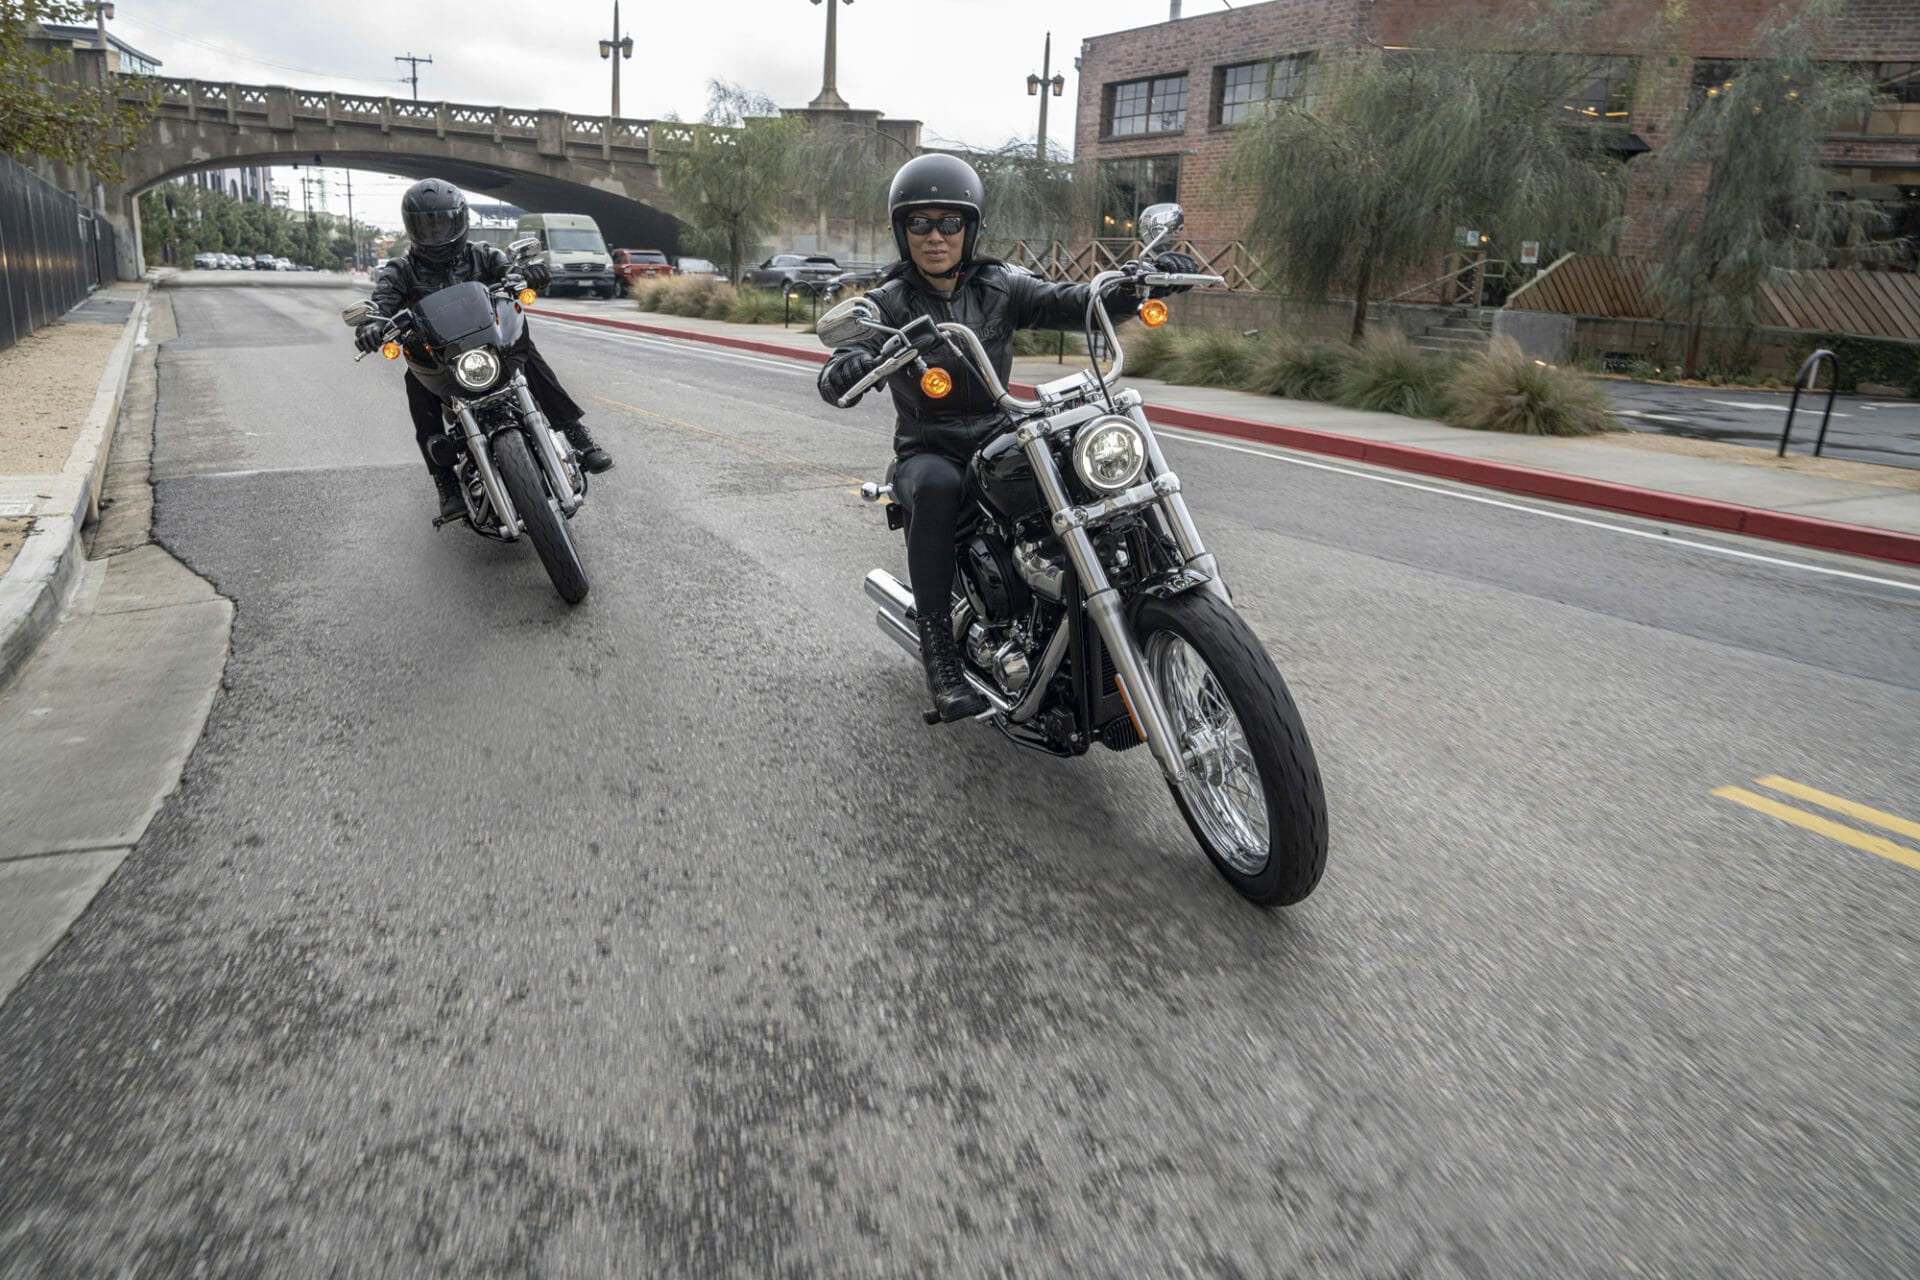 https://ezfo86czbpk.exactdn.com/wp-content/uploads/2020/02/Harley-Davidson-Softail-Standard-MOTORCYCLE-NEWS-APP-MOTORRAD-NACHRICHTEN-APP-MotorcyclesNews-7.jpg?strip=all&lossy=1&sharp=1&ssl=1